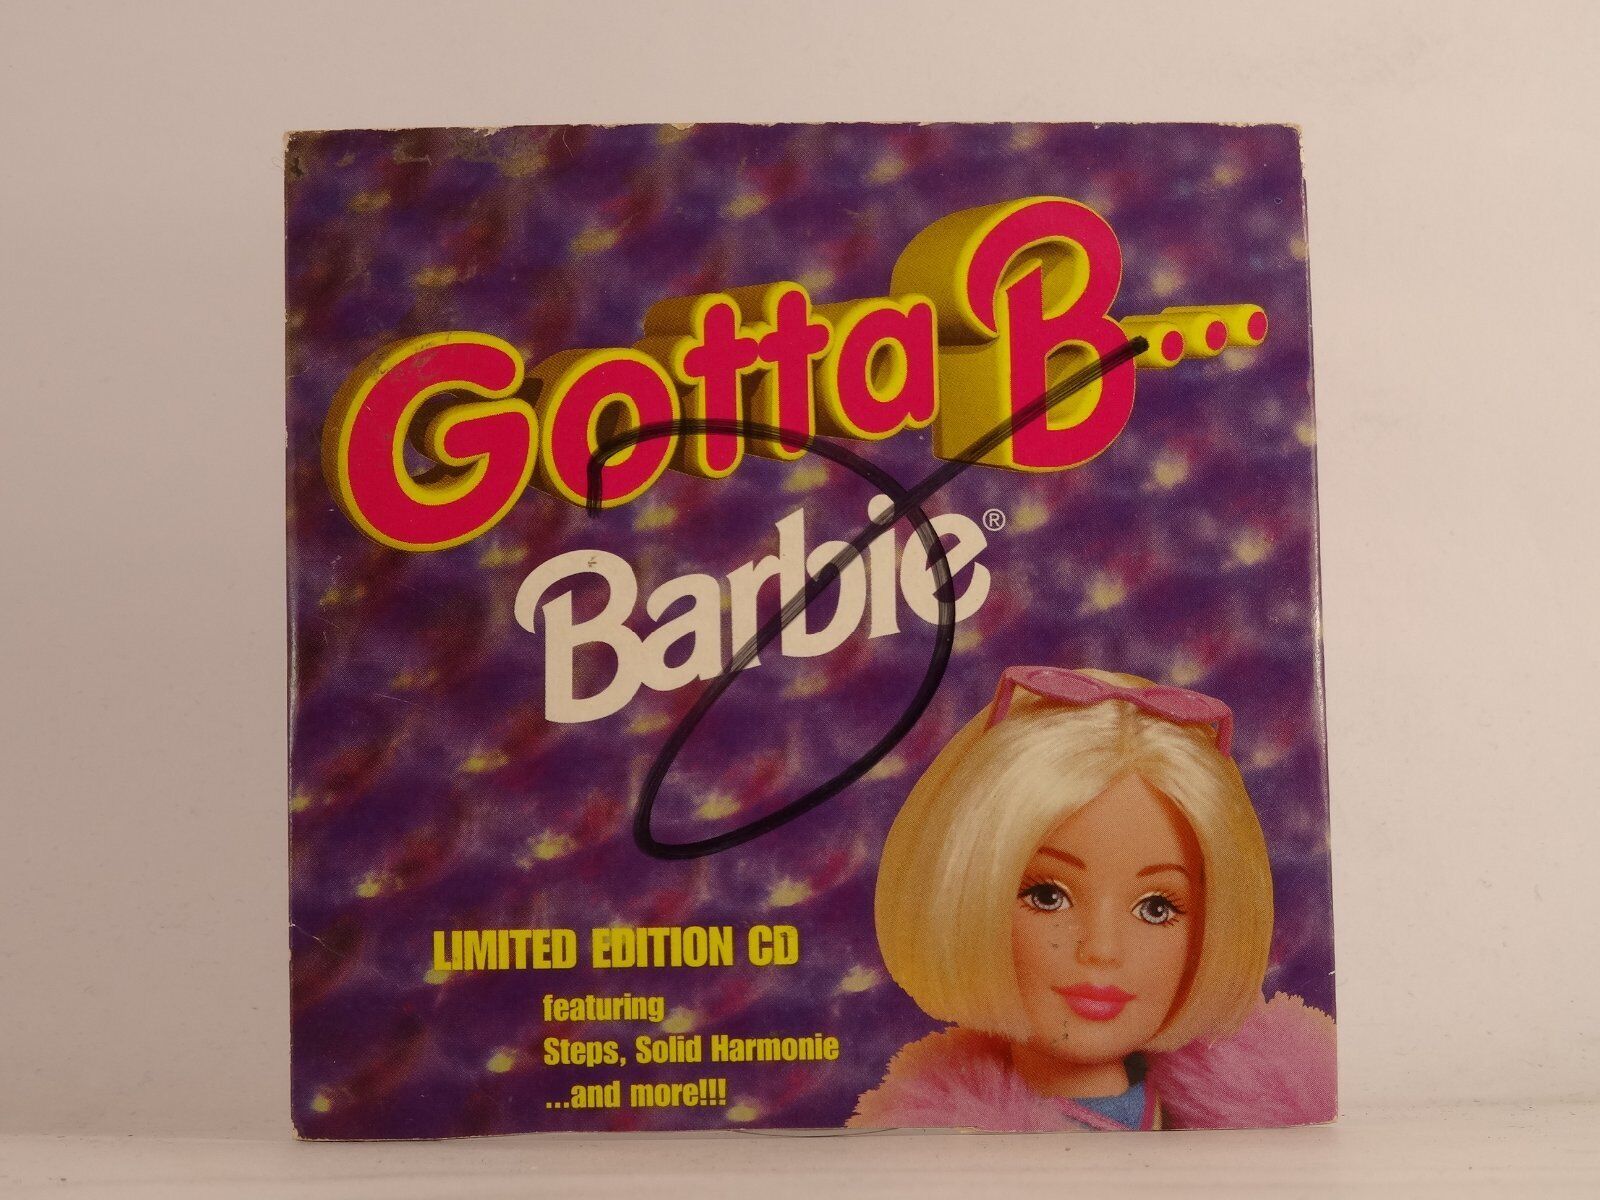 VARIOUS ARTISTS GOTTA B..BARBIE (575) Promo CD Album JIVE